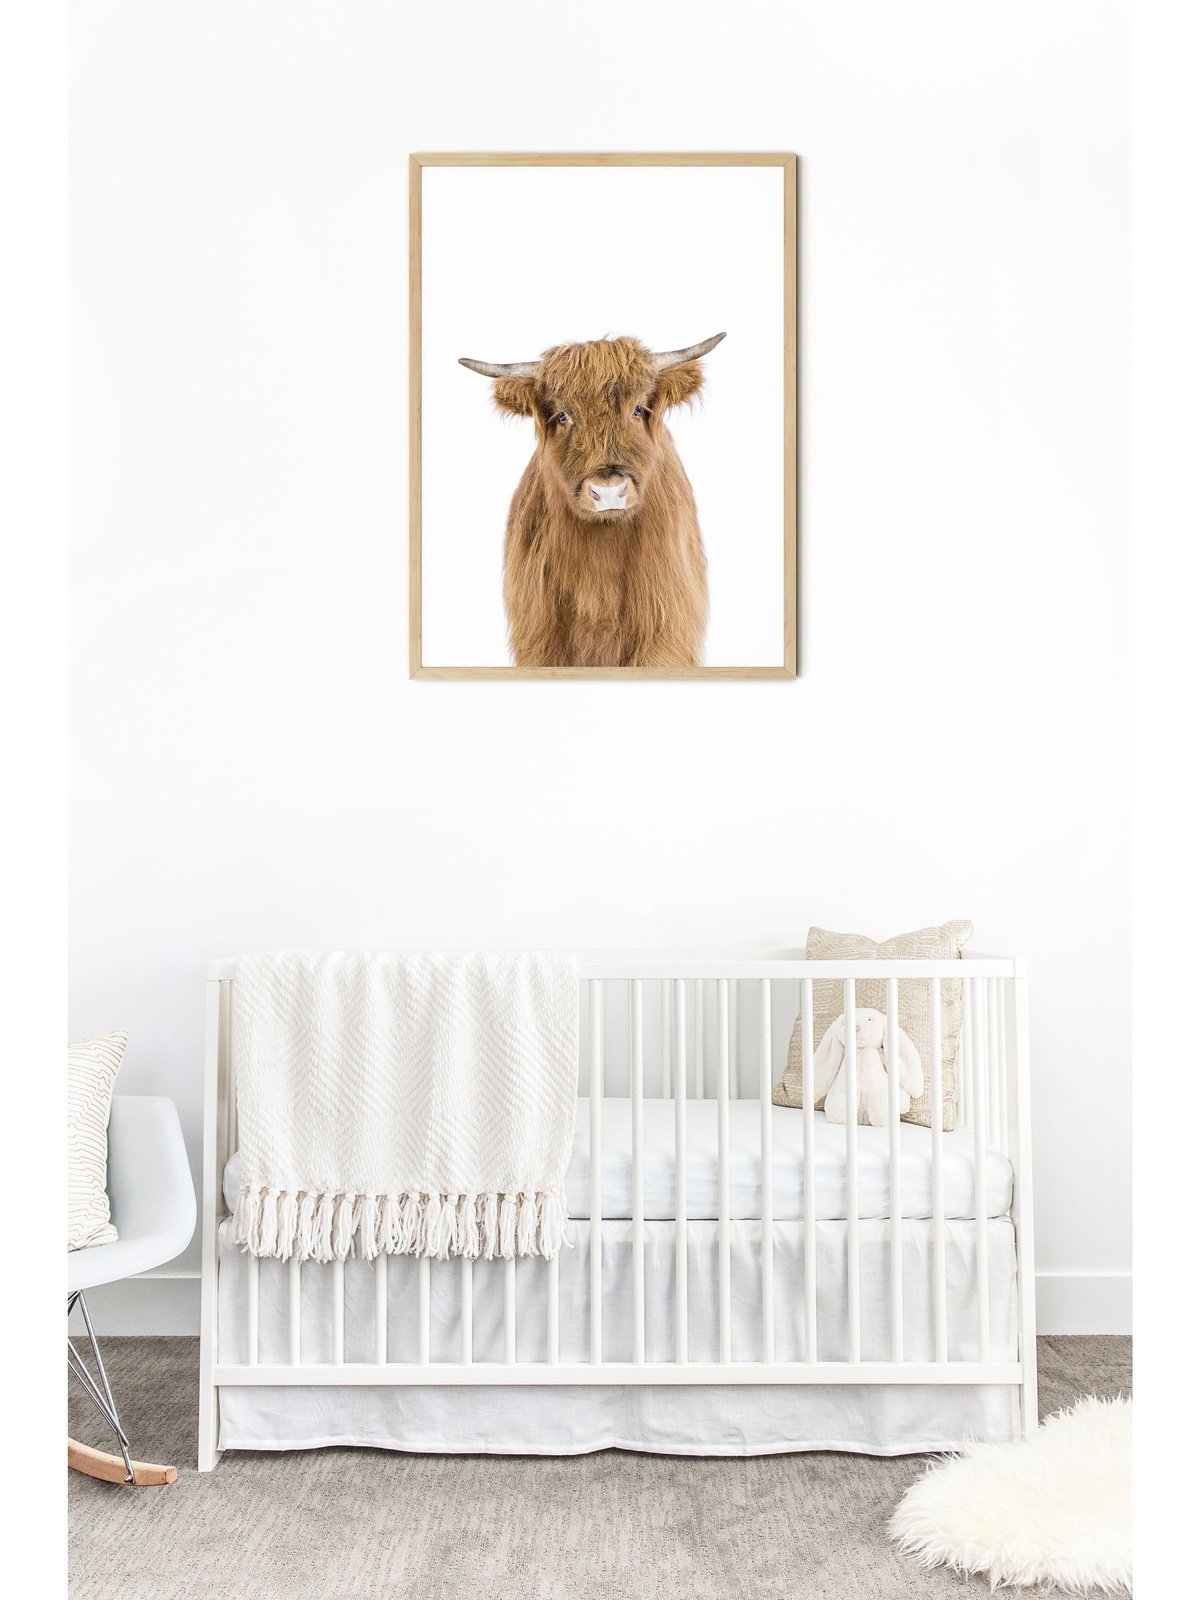 Baby Cow Art Print